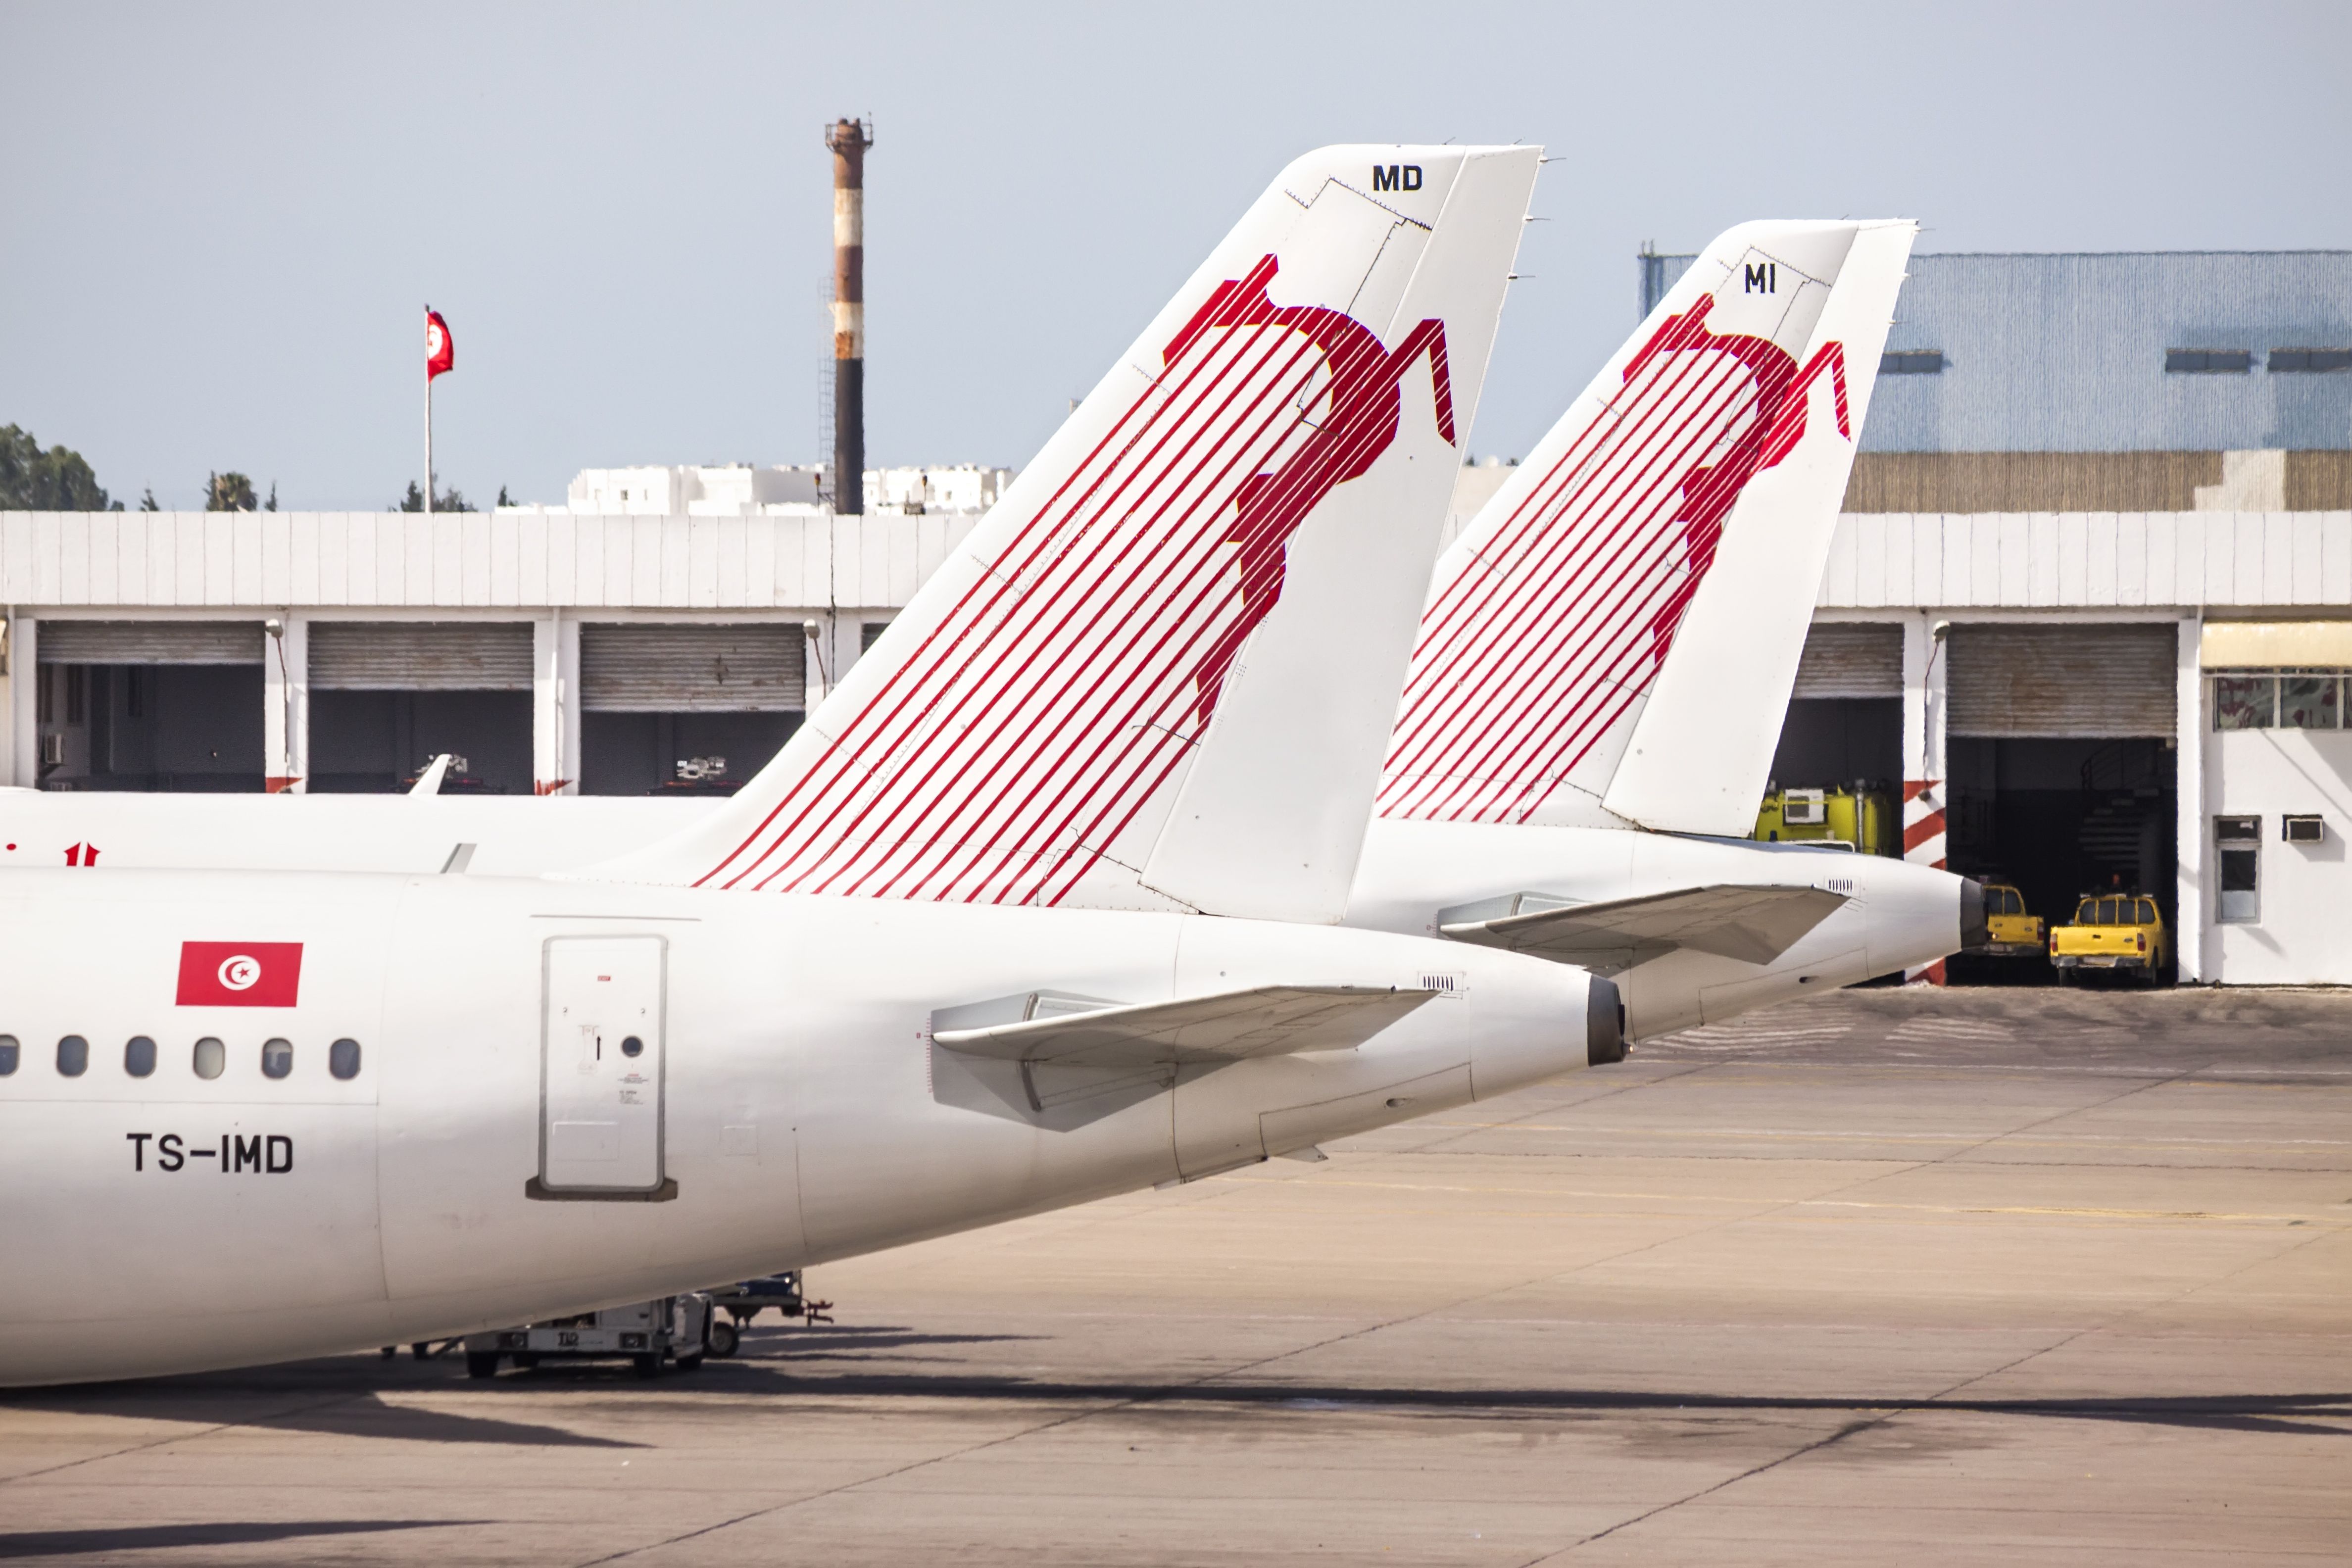 The queues of several Tunisair aircraft at an airport.